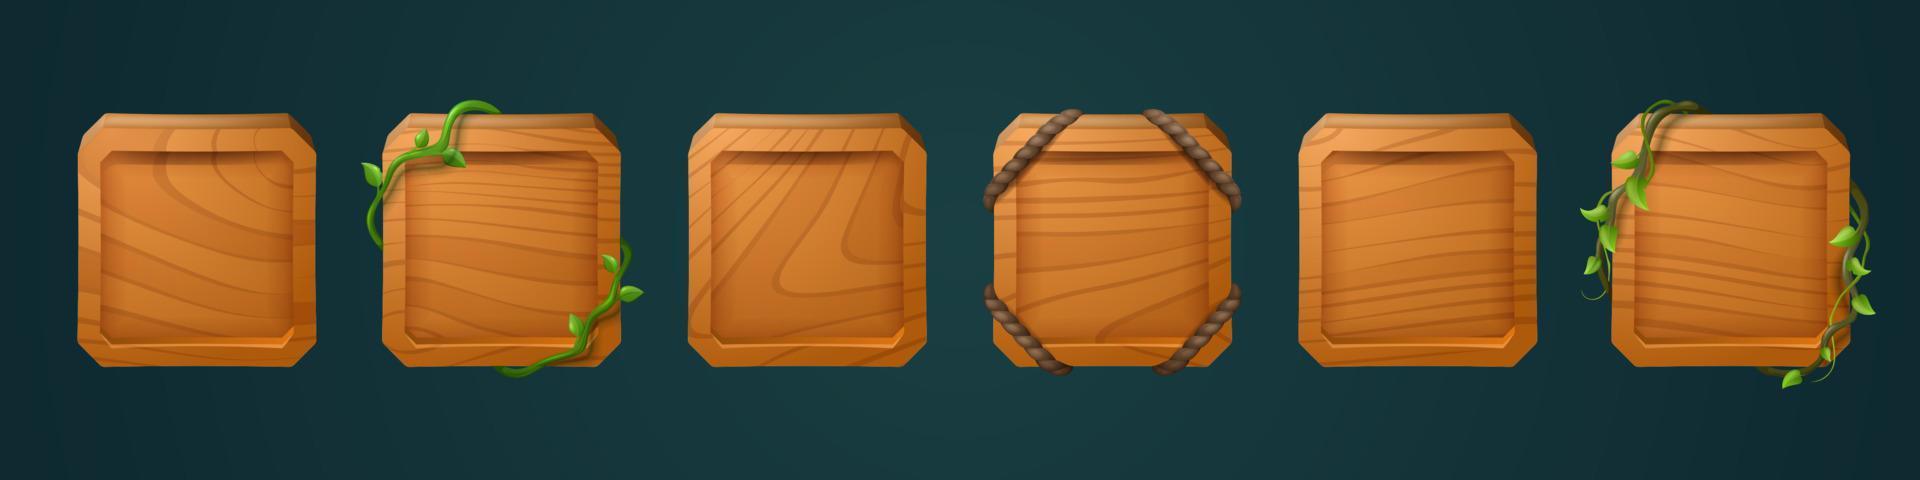 Square wooden frames for game user avatar vector